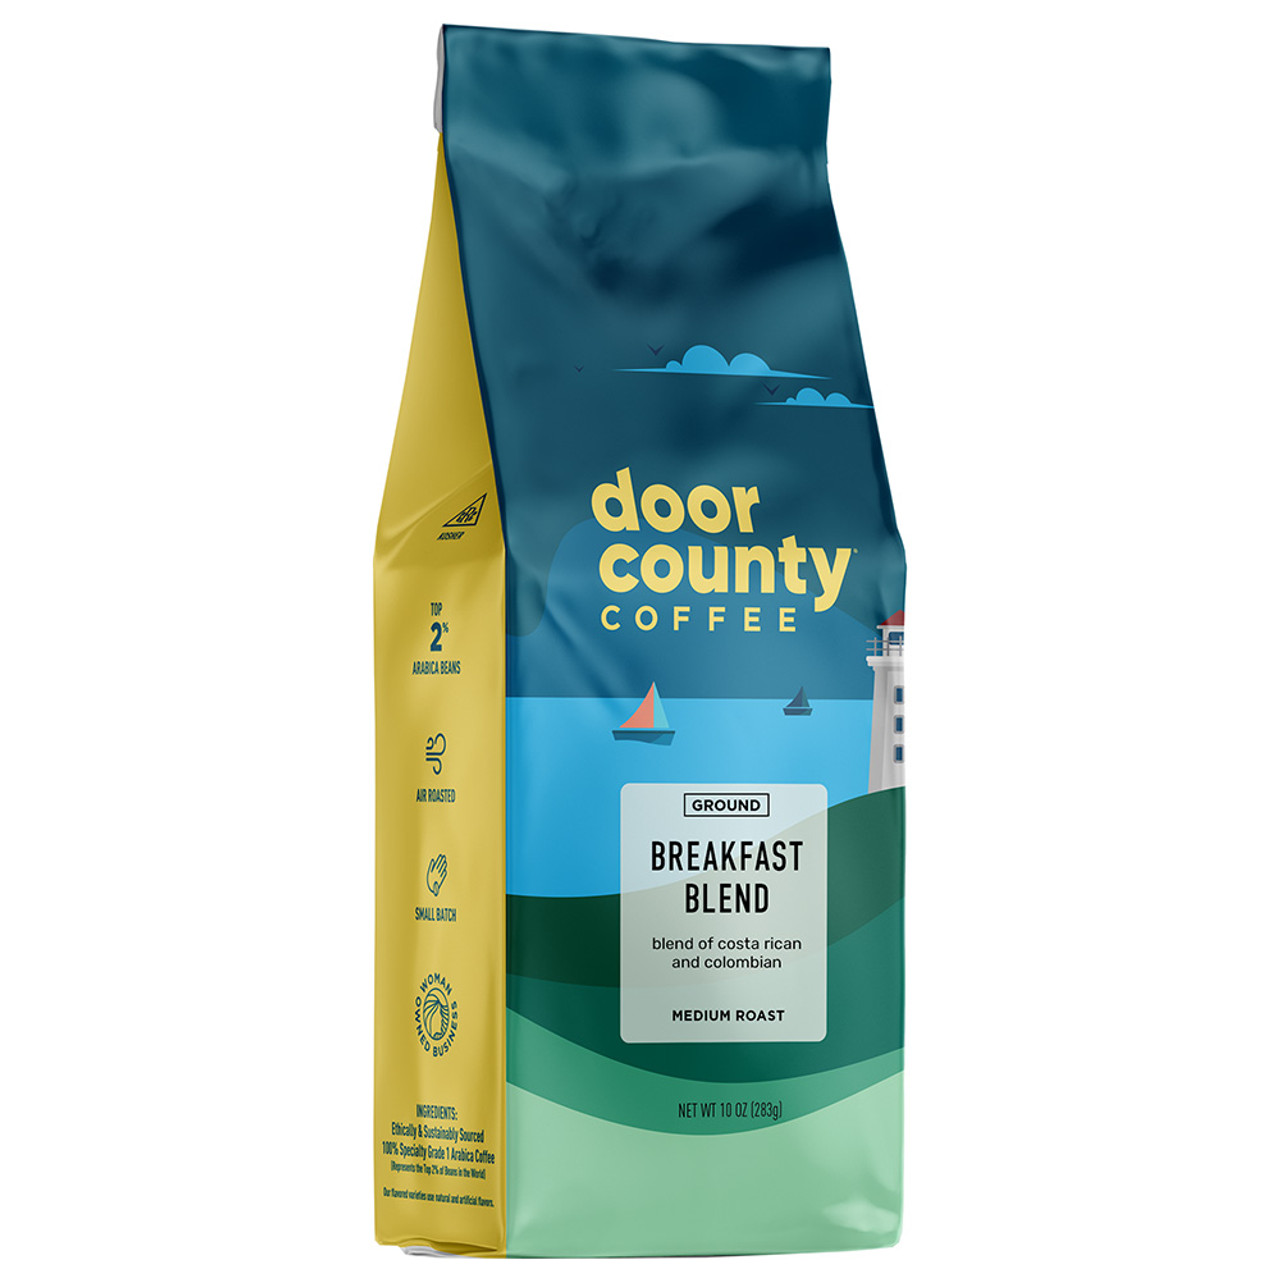 Door County Breakfast Blend Coffee with Yeti Tumblers – Echo Valley Meats